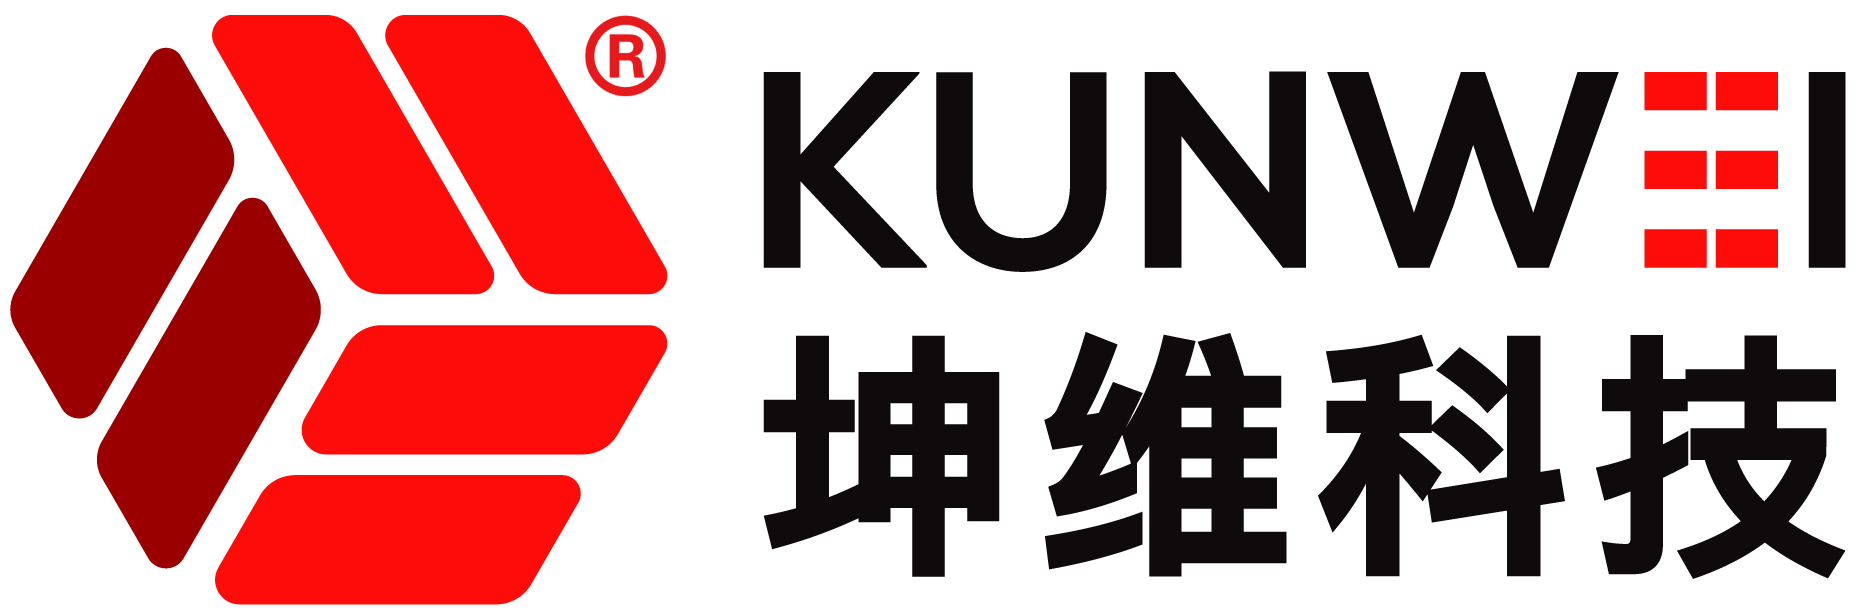 cropped kunwei logo 1 1